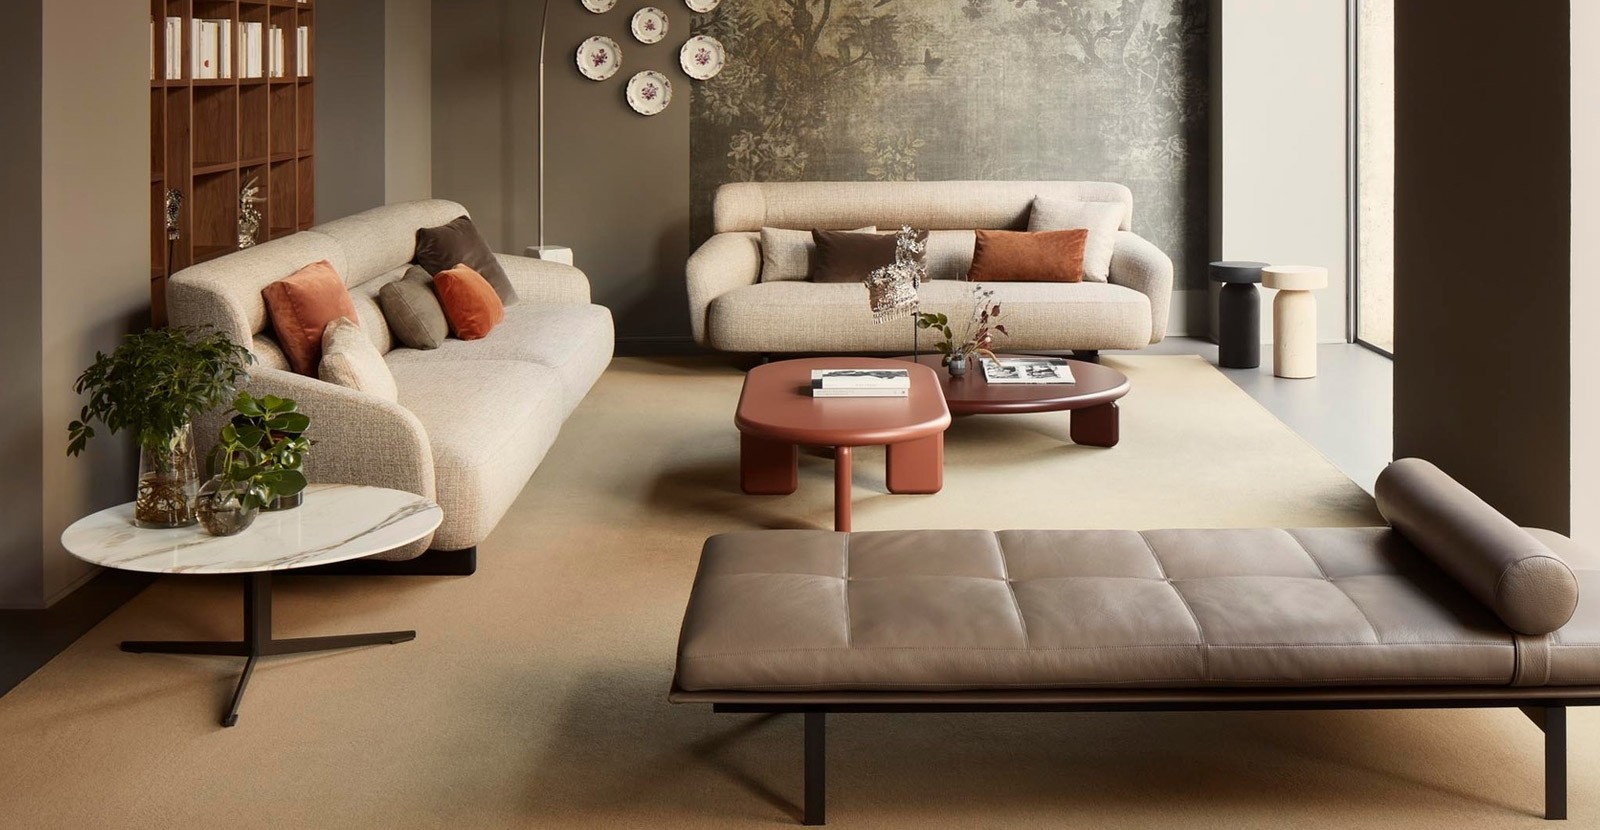 Buy Lema Mobili custom furniture on Mobilificio Marchese